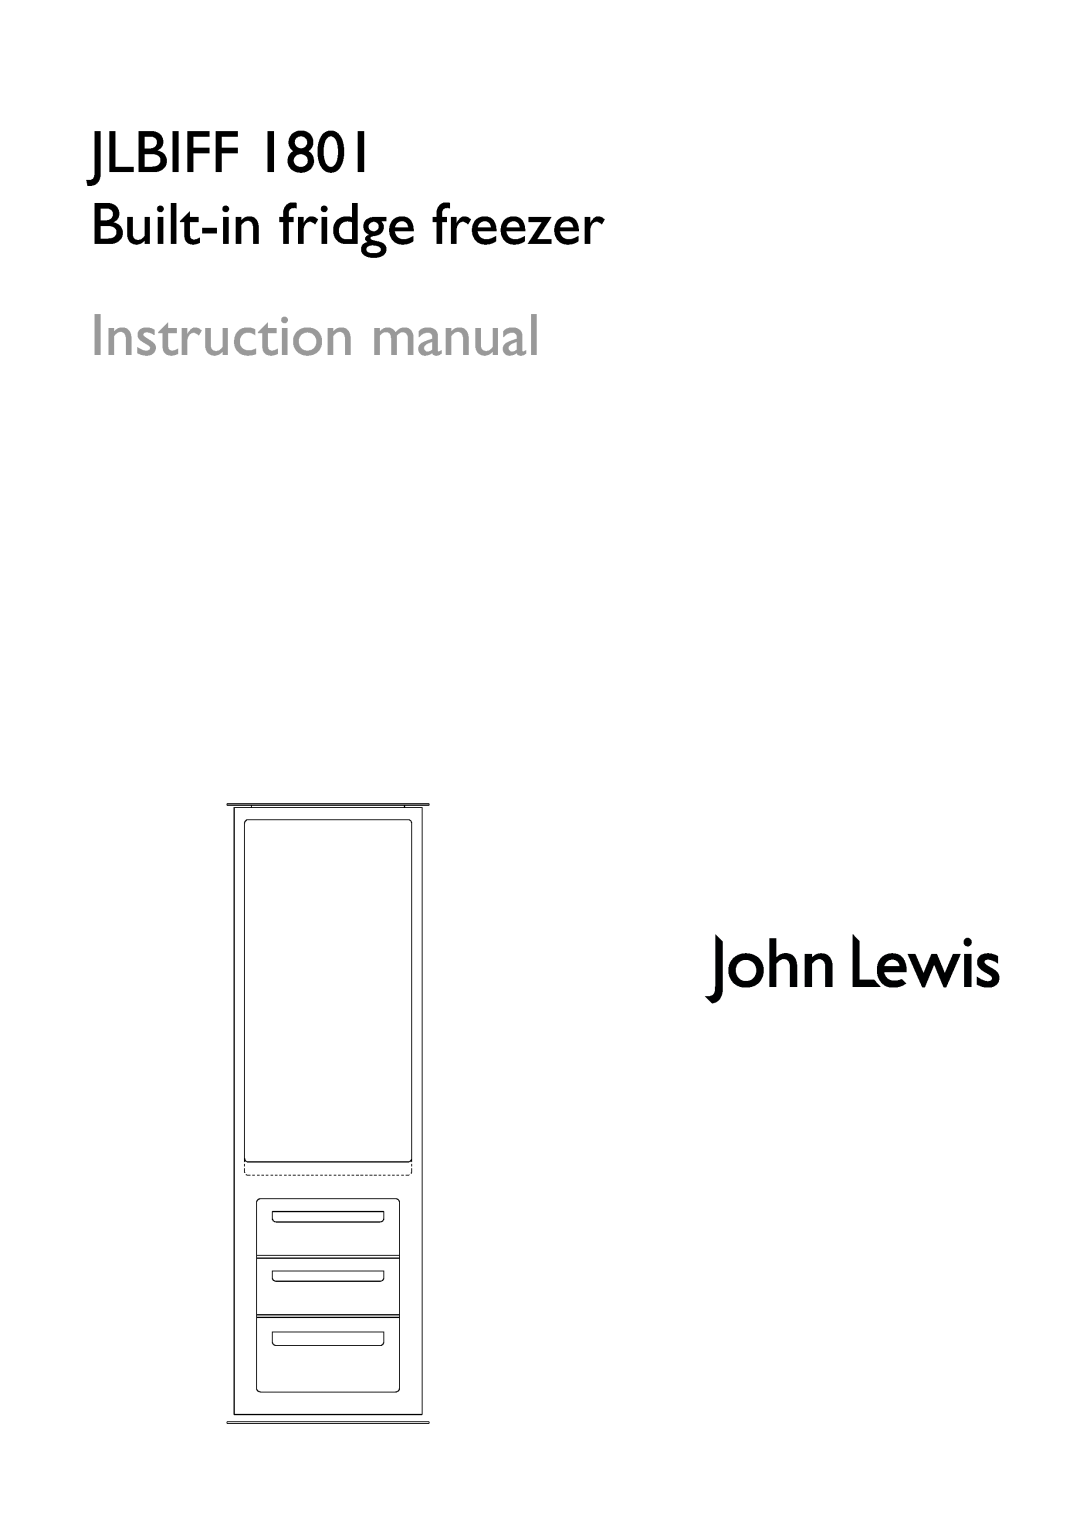 John Lewis instruction manual JLBIFF 1801 Built-in fridge freezer 